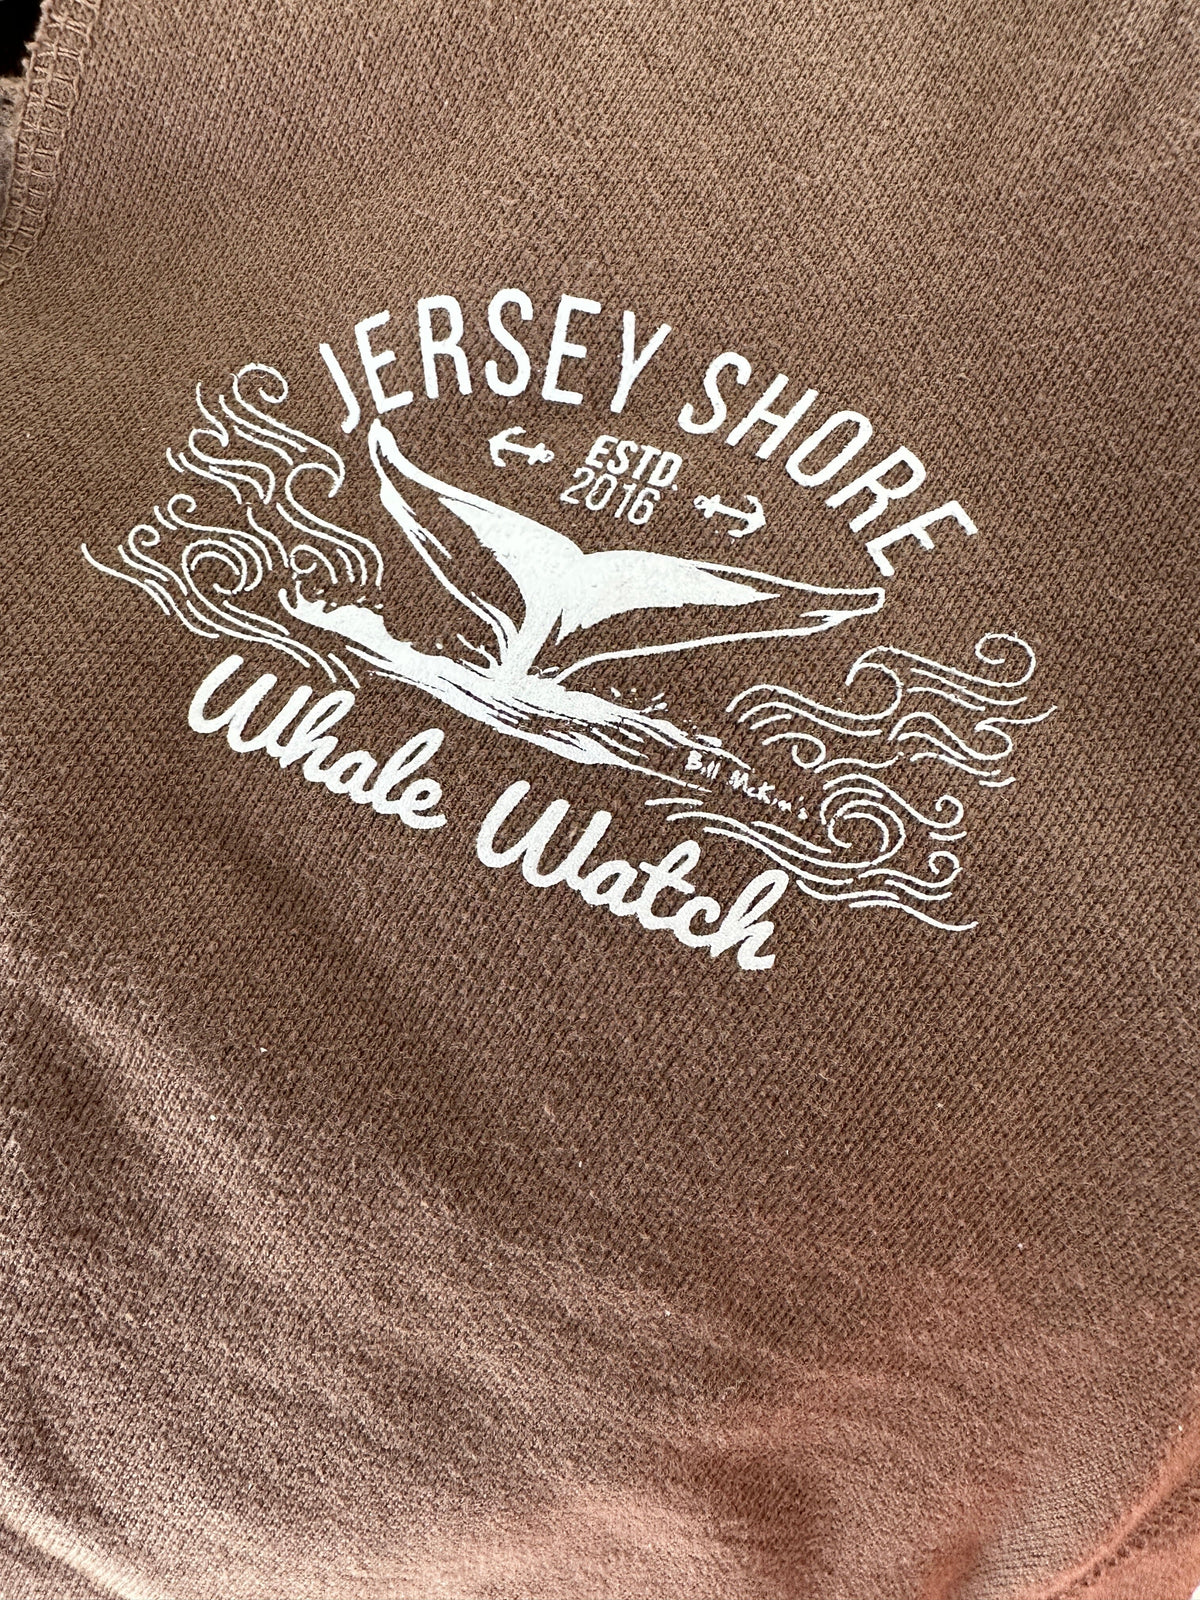 Jersey Girl Hooded Sweatshirt 2023 JSWW Bill McKim Photography -Jersey Shore whale watch tours 